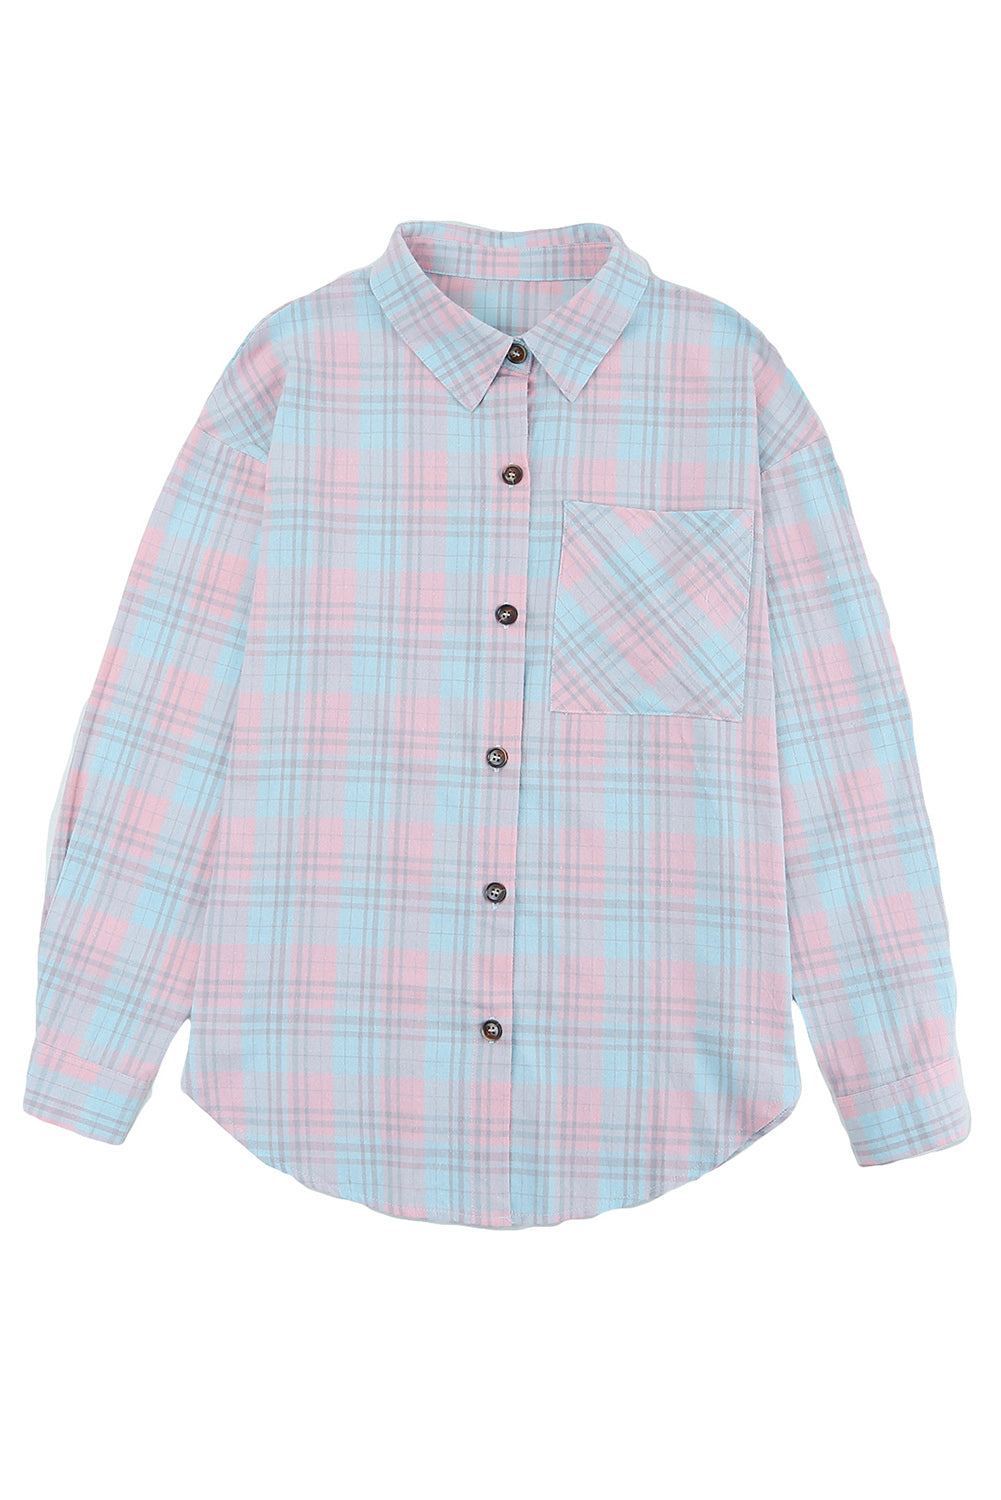 Pink Collared Neckline Plaid Pattern Long Sleeve Shirt